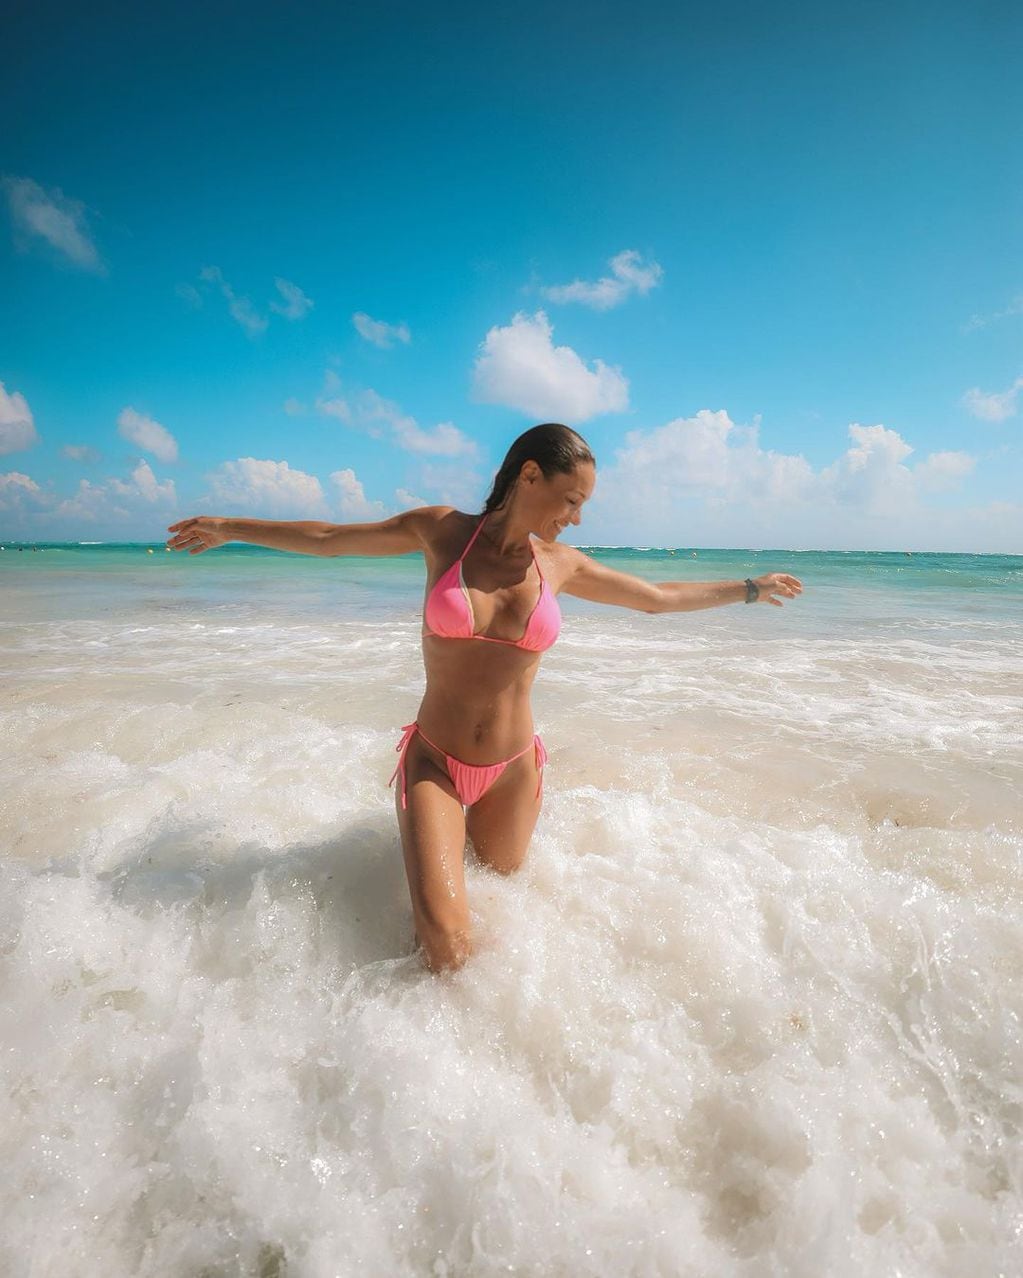 Pampita lució una bikini total pink ultra xxs y paralizó las playas de México